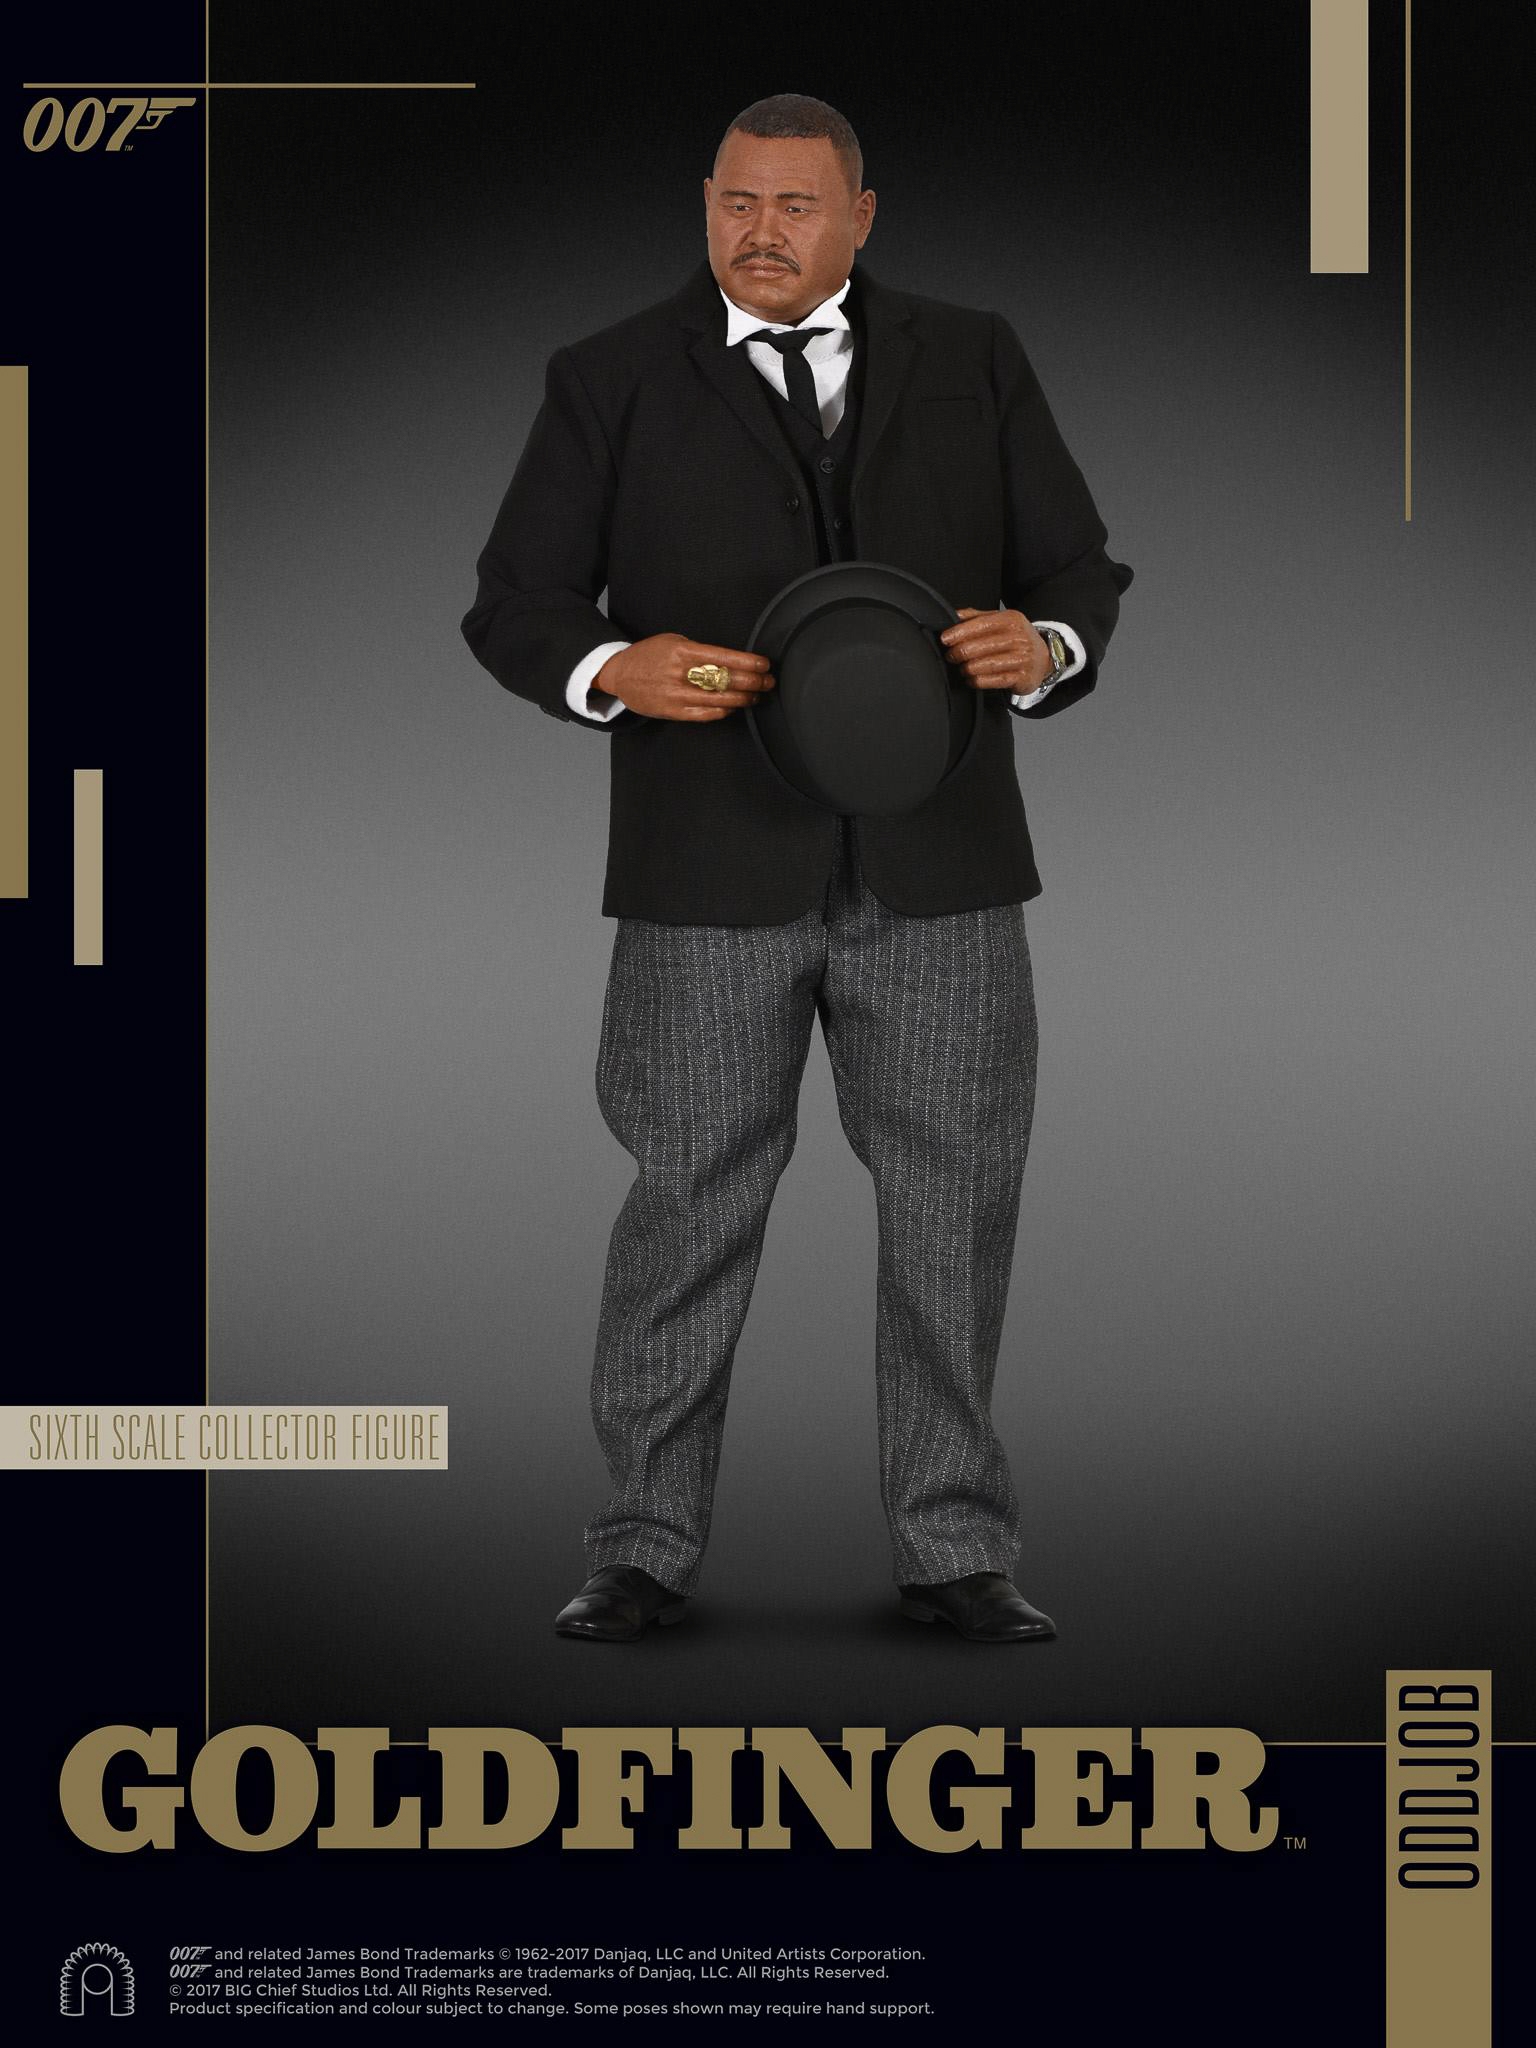 Big-Chief-James-Bond-Goldfinger-Oddjob-Full-Reveal-032.jpg